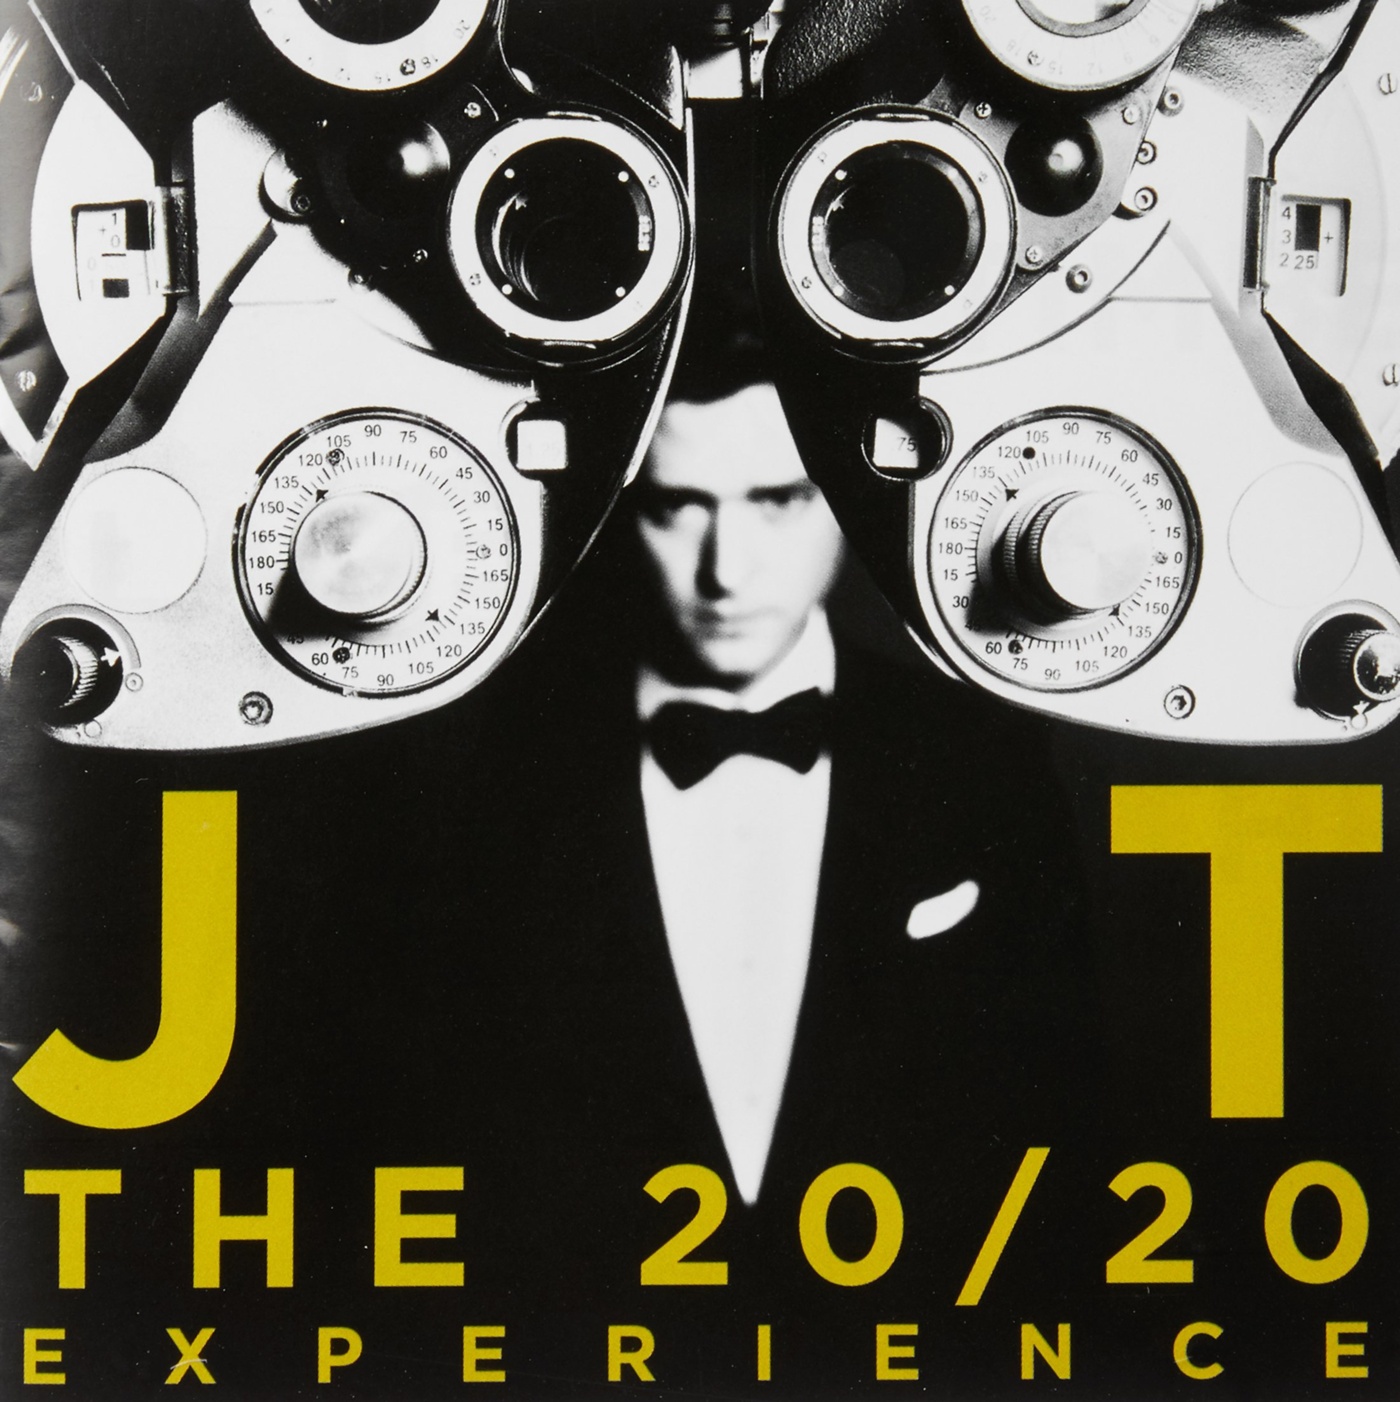 The 20/20 experience Джастин Тимберлейк. The 20/20 experience 2 of 2. Justin Timberlake Mirrors обложка. Justin Timberlake album. 20 20 experience